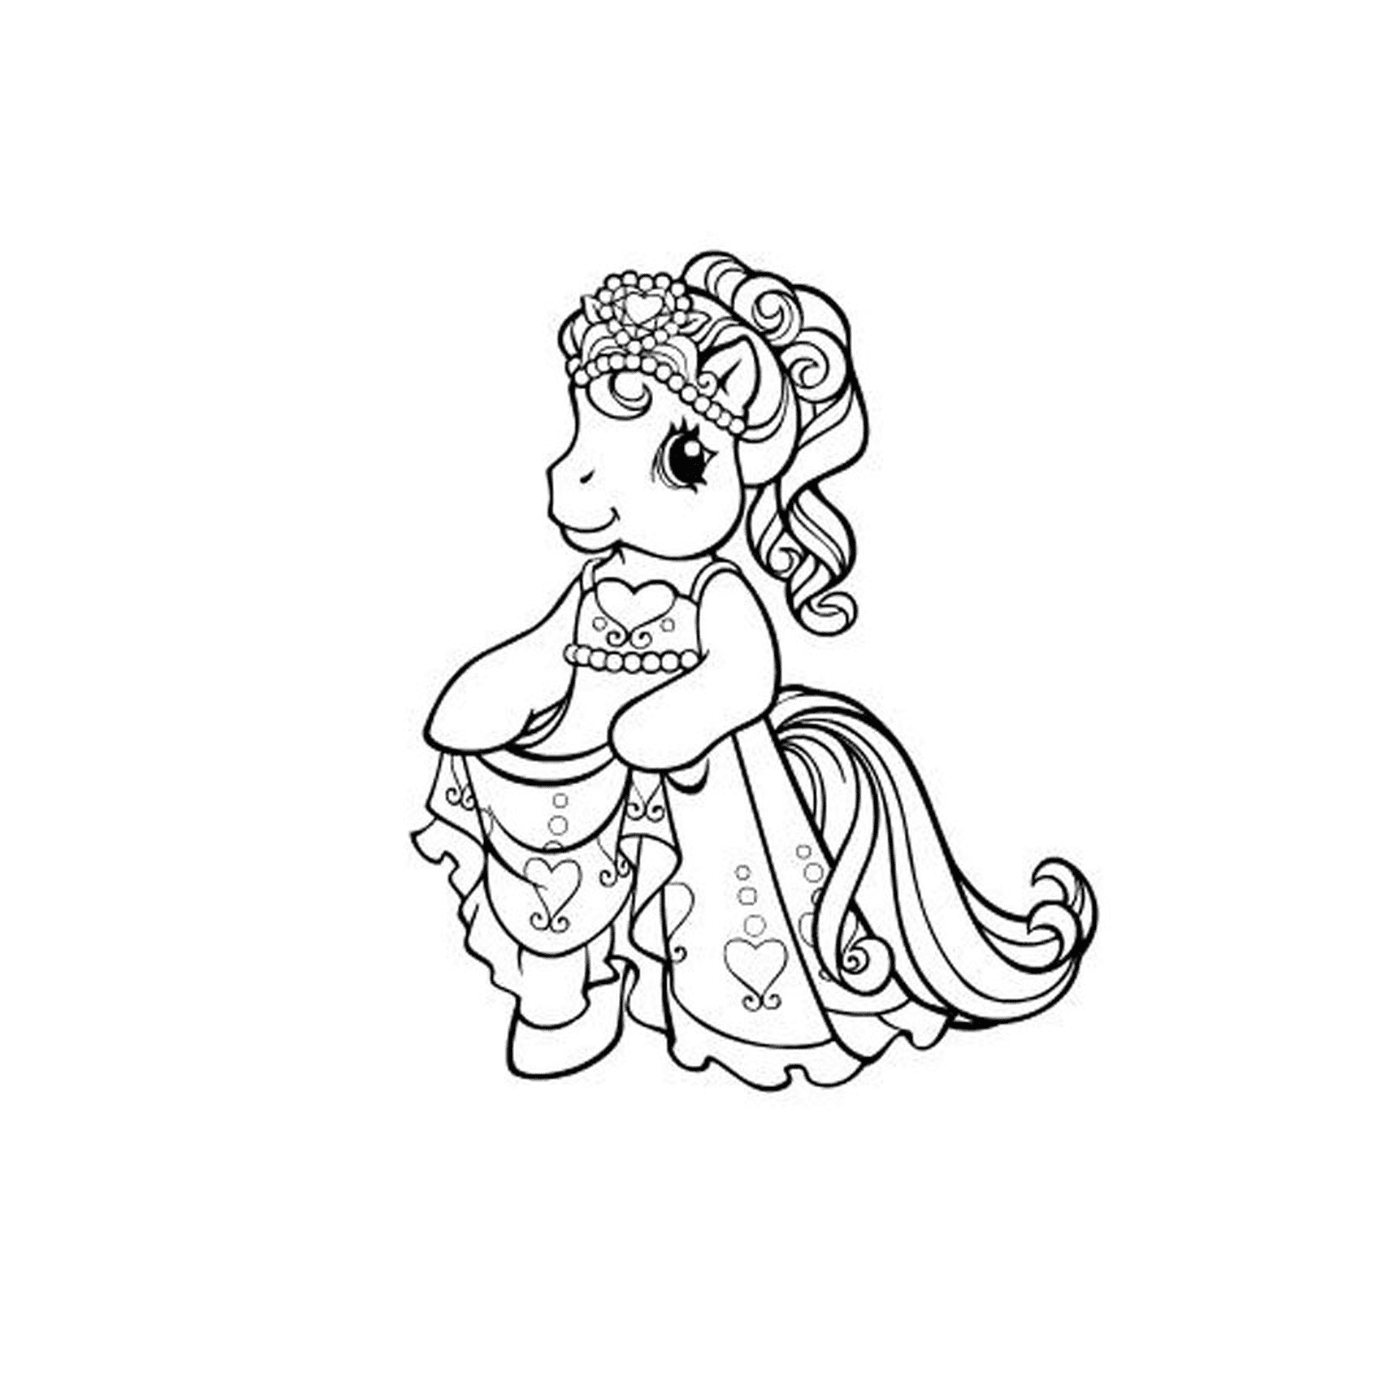   Petite fille en robe de princesse 